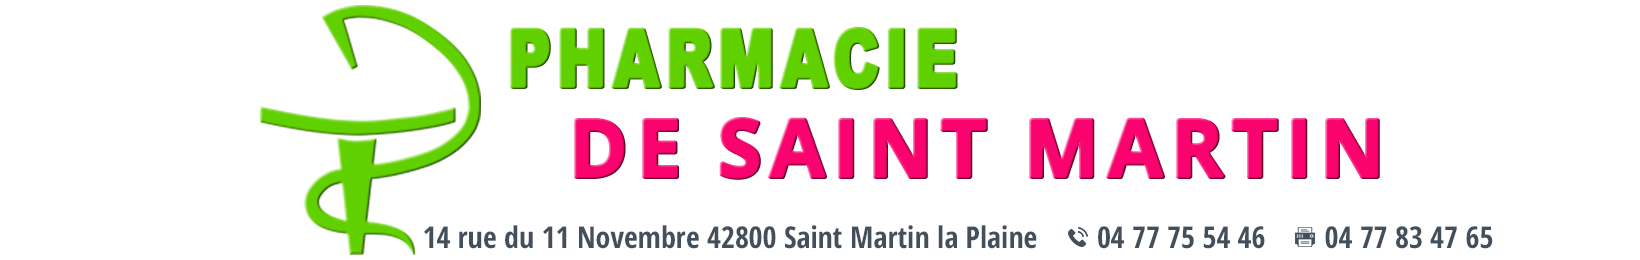 Pharmacie de Saint Martin